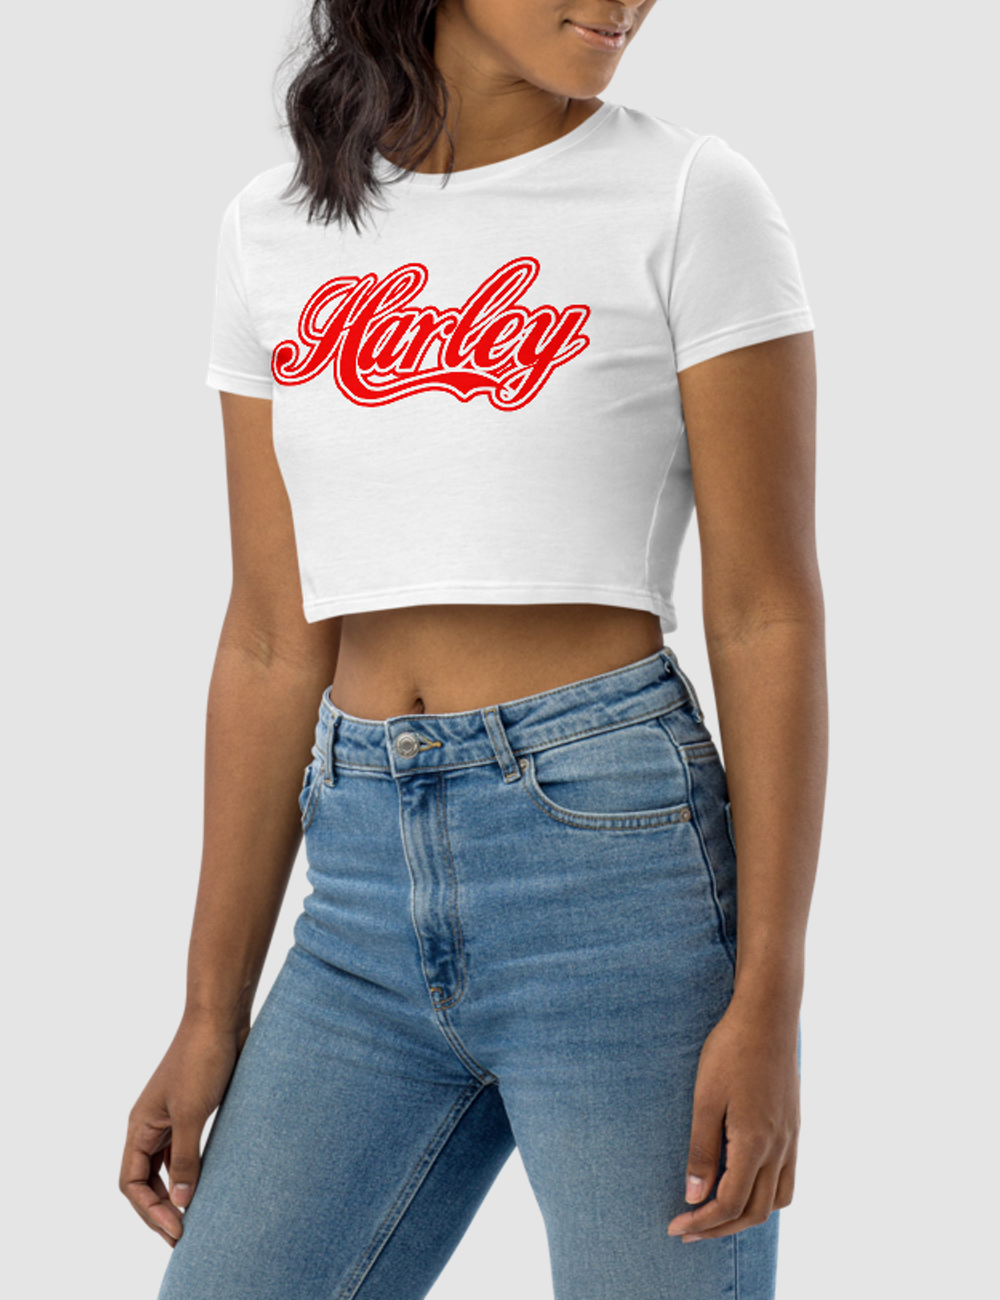 Harley | Women's Crop Top T-Shirt OniTakai